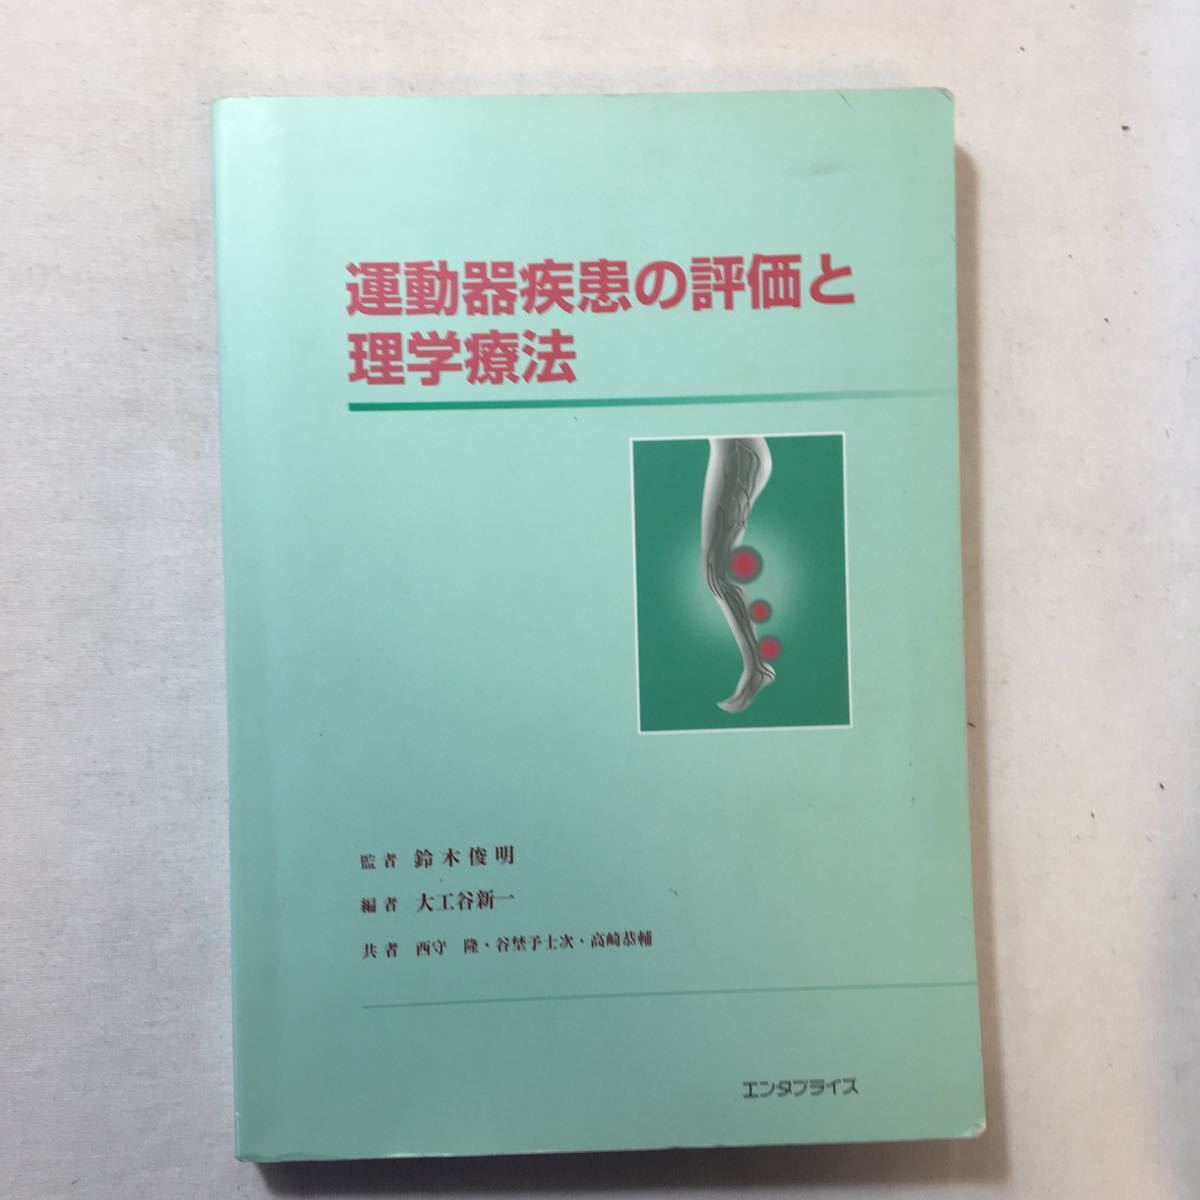 zaa-302♪運動器疾患の評価と理学療法 単行本 2003/12/21 鈴木 俊明監修 (著), 西守 隆 (著),